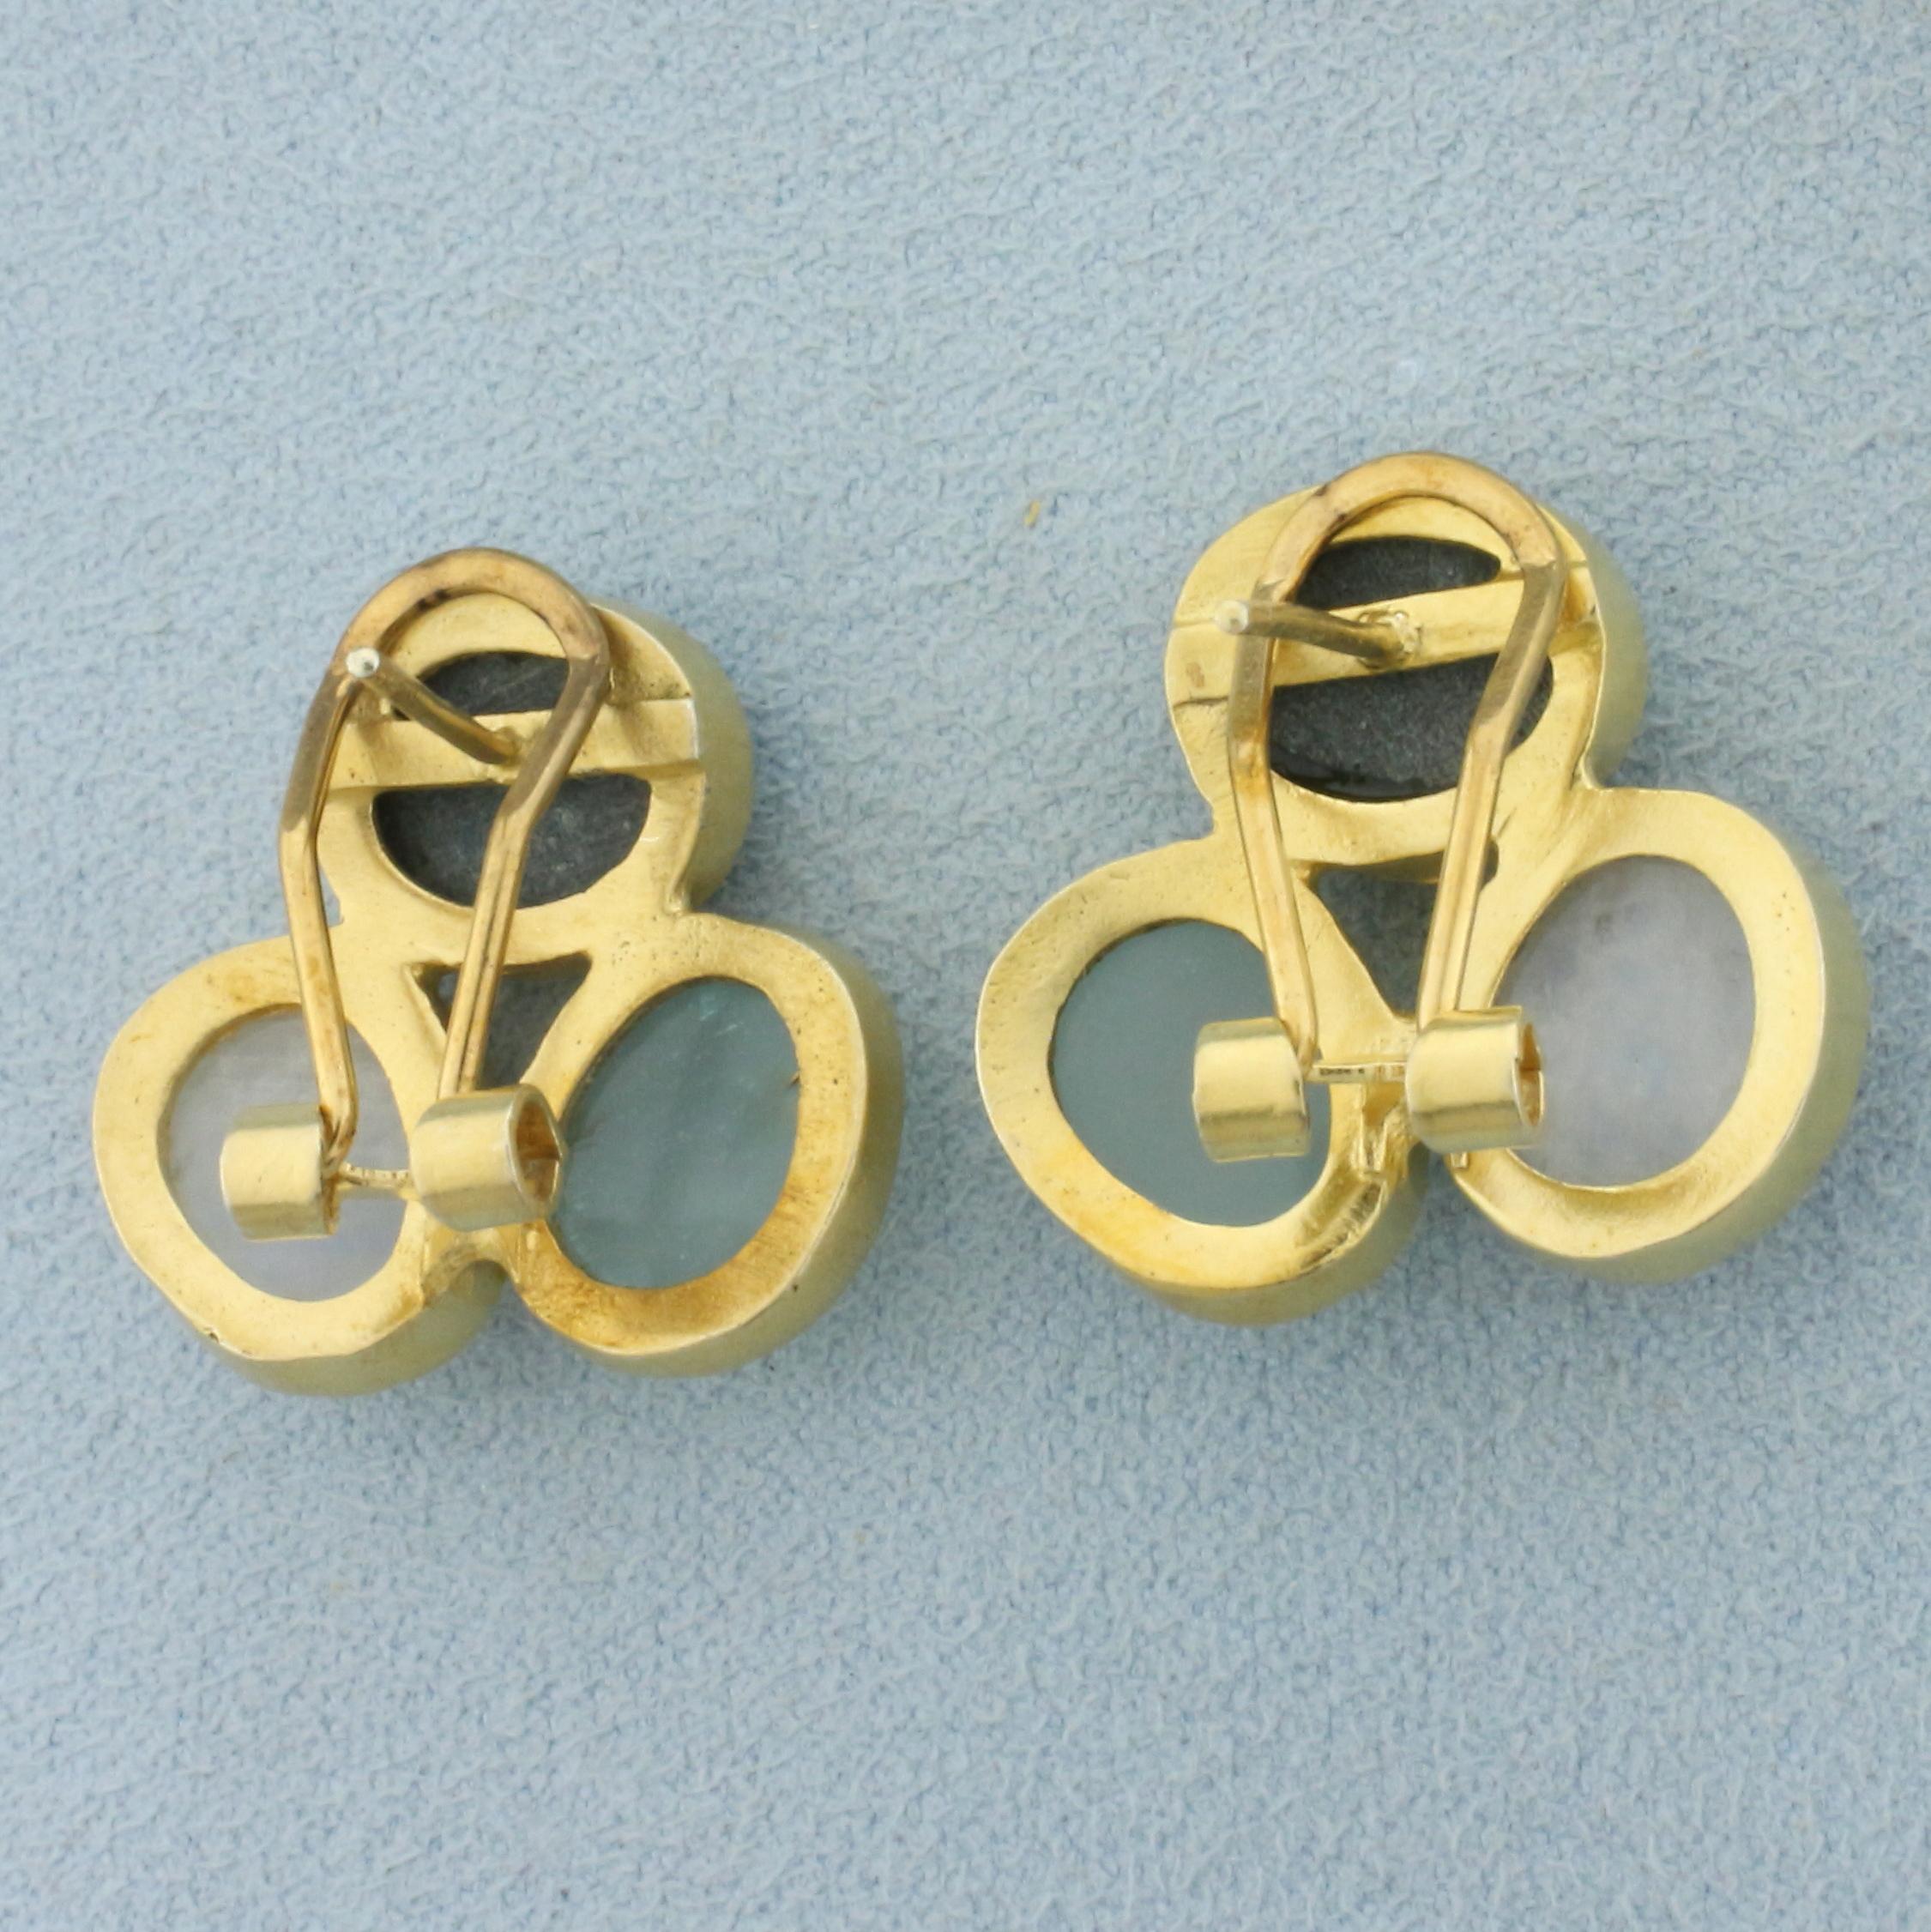 Unique Bezel Set Quartz Statement Earrings In 10k Yellow Gold